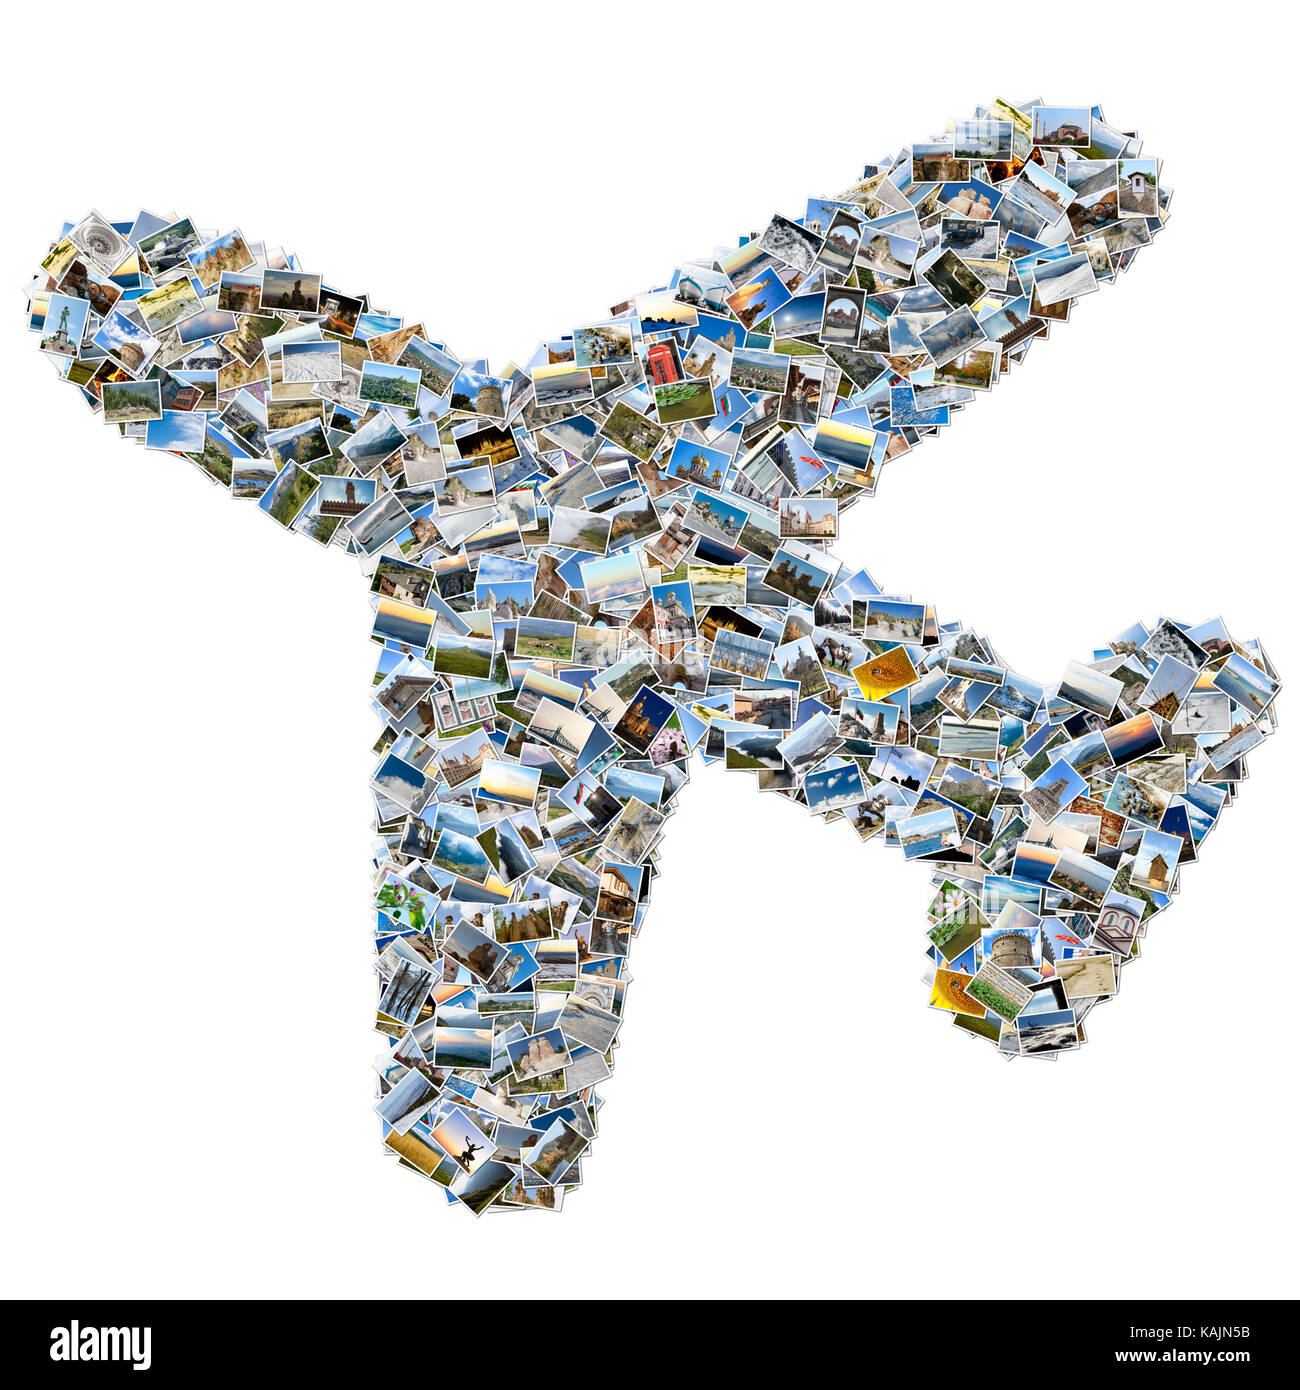 Collage of travel photos - mosaic airplane isolated on white background Stock Photo